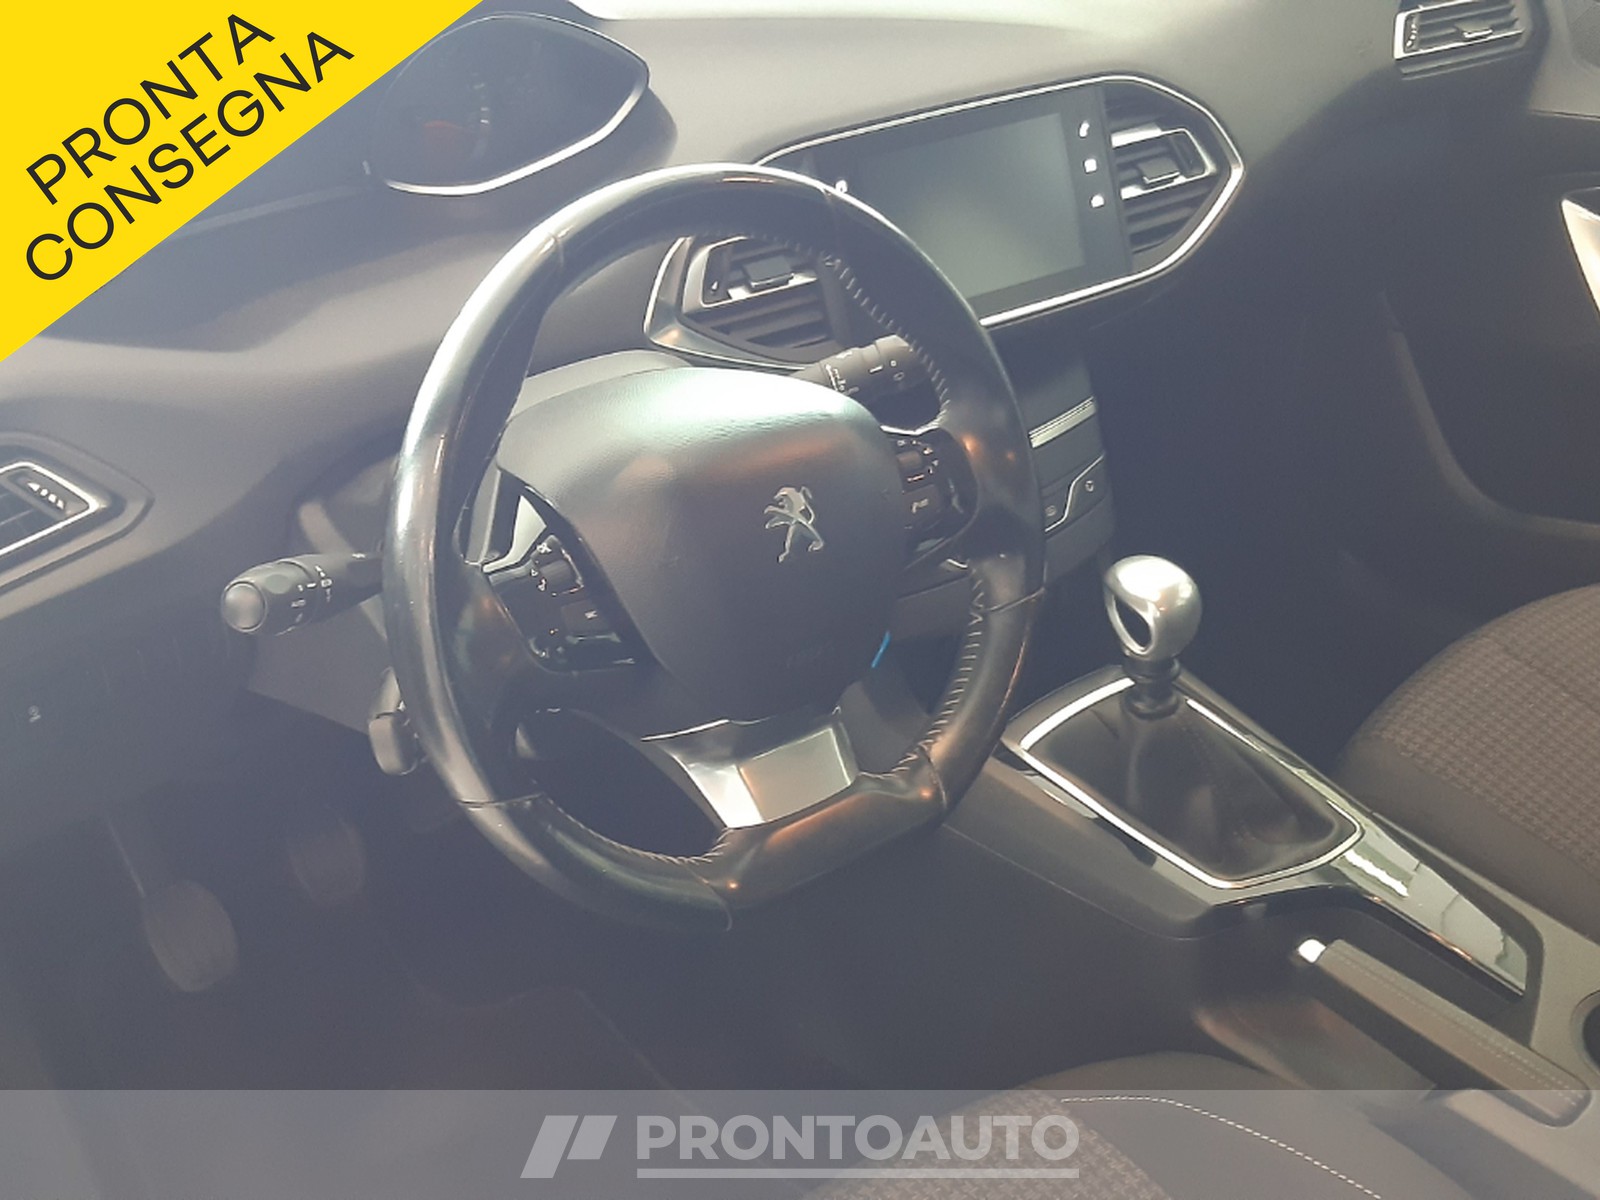 PRONTOAUTO Peugeot 308